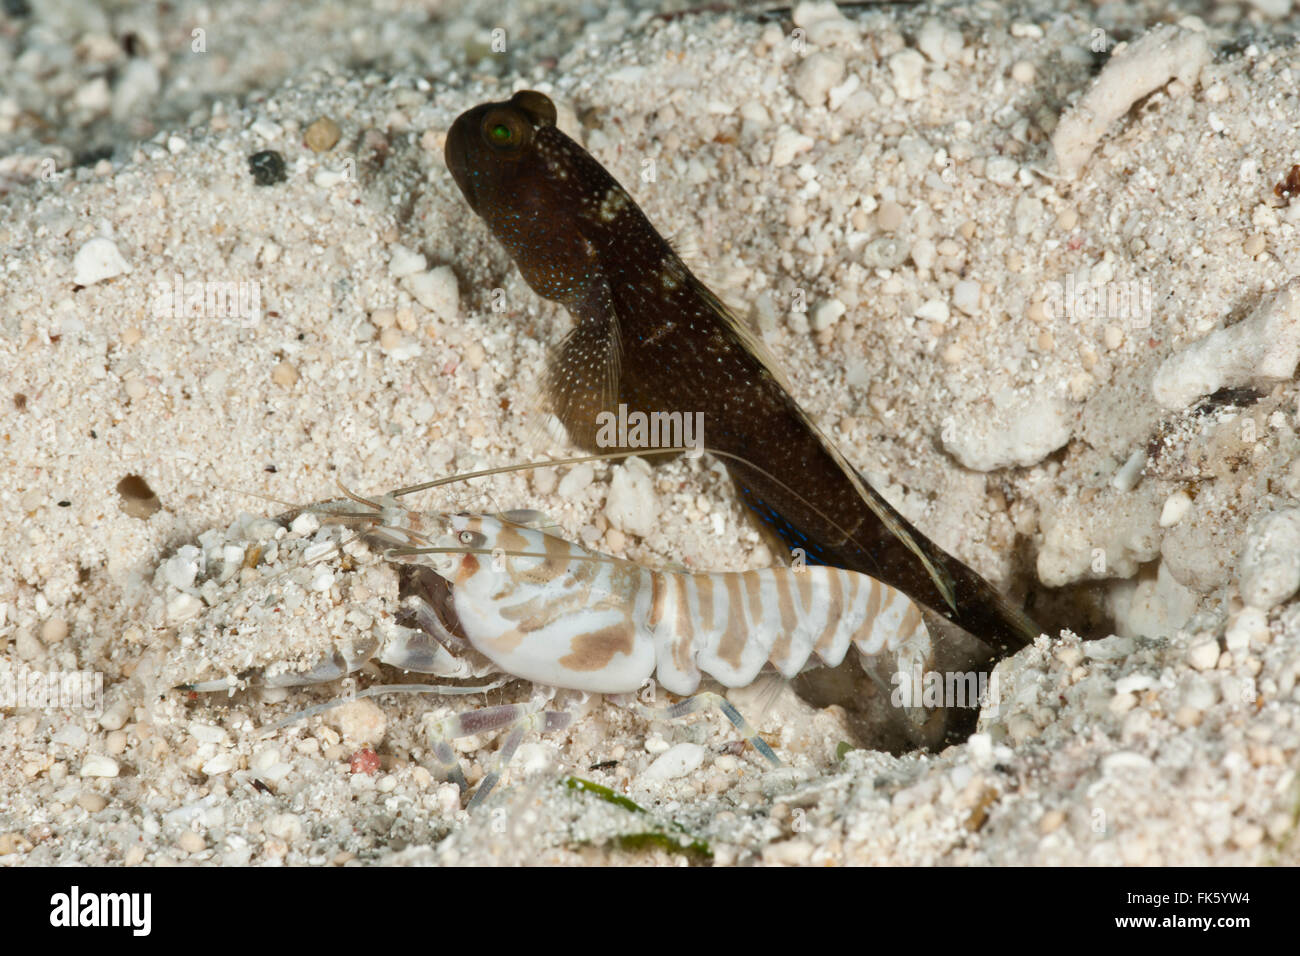 Banded shrimpgoby (Cryptocentrus cinctus) dark variation with tiger pistol or snapping shrimp (Alpheus sp.) Stock Photo